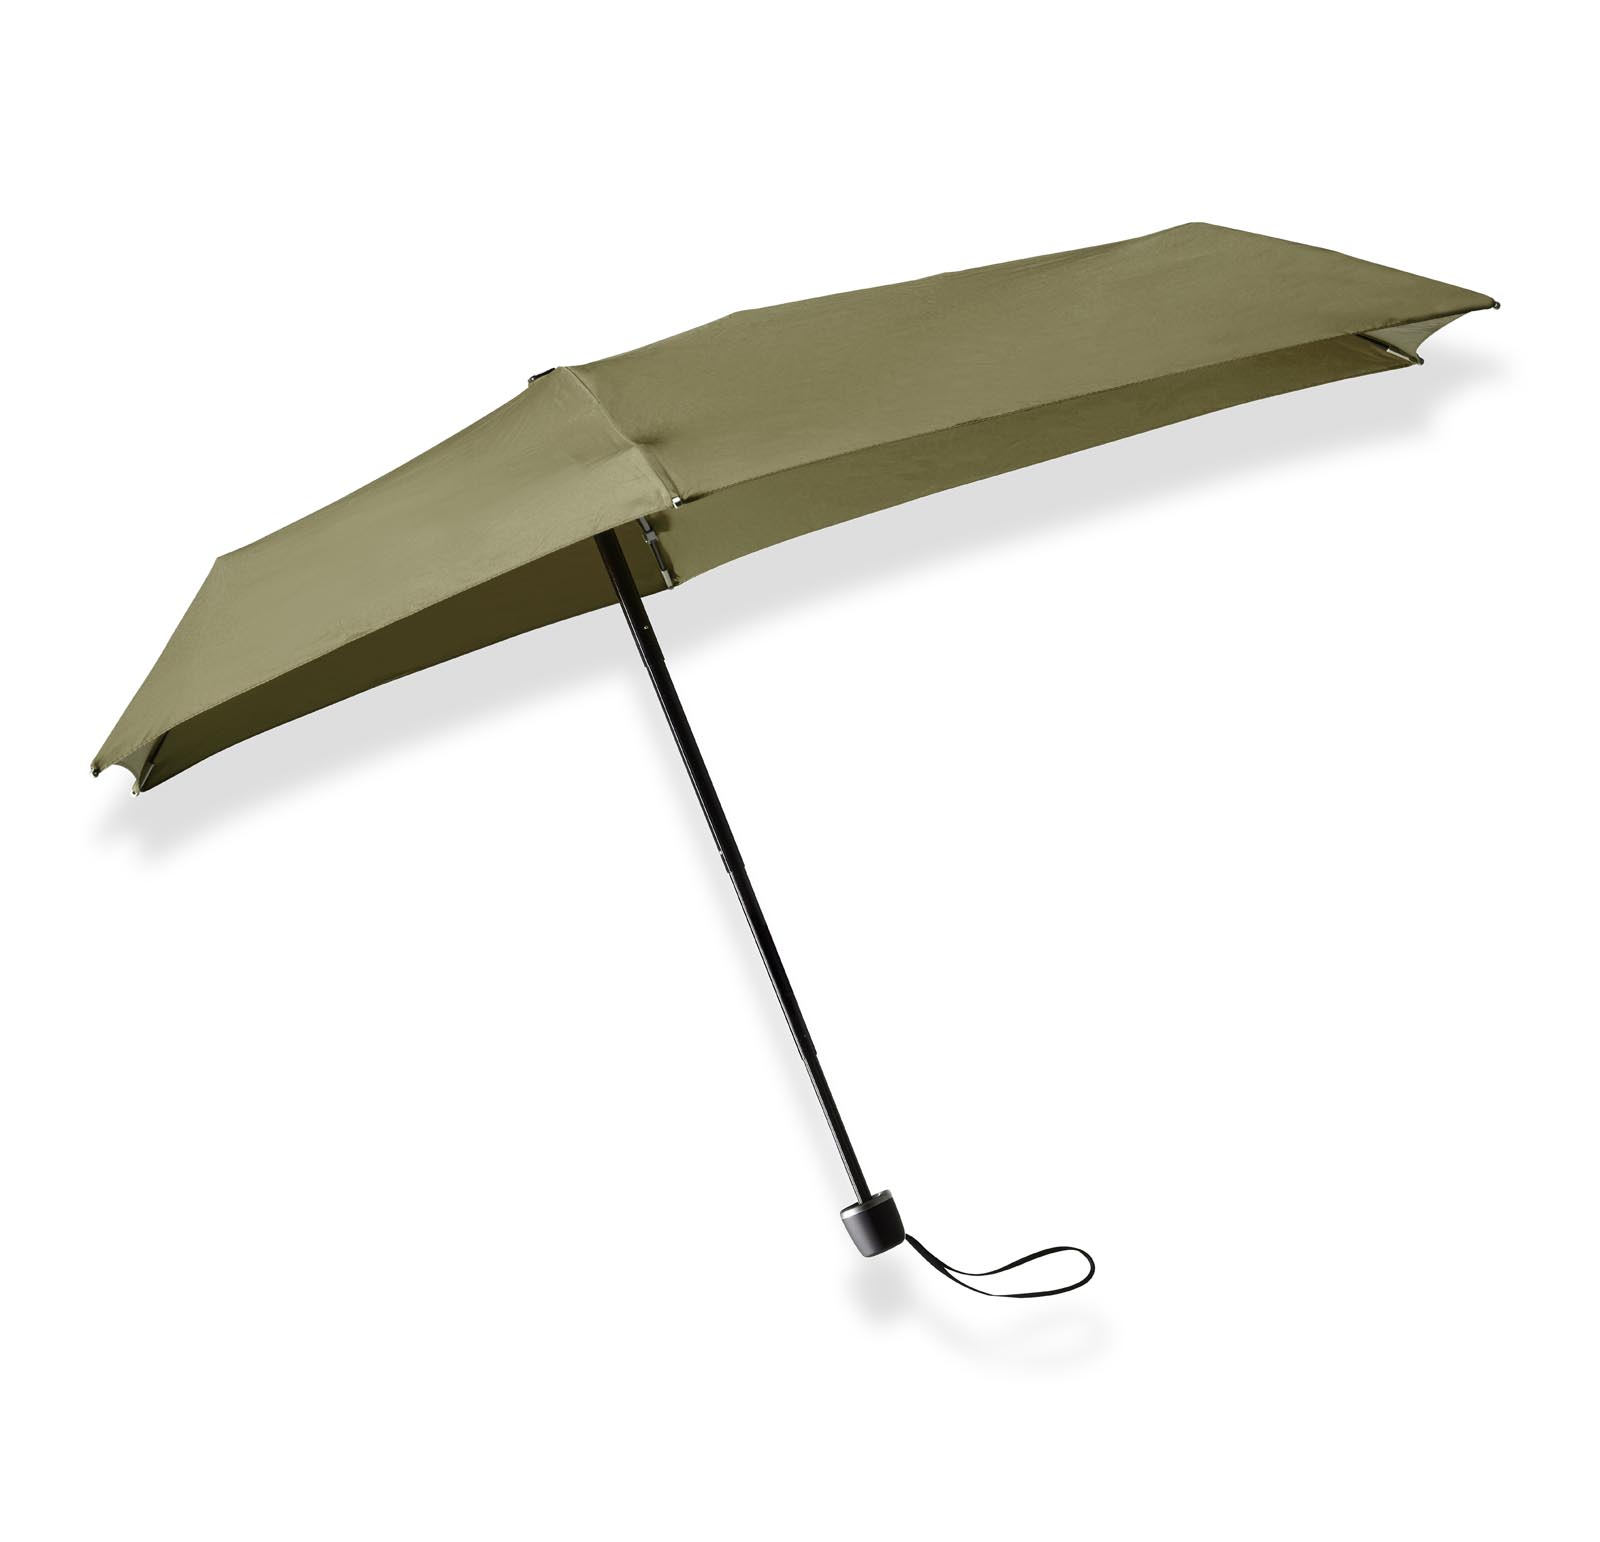 sponsor ik ben trots gisteren Groene opvouwbare paraplu micro kopen? senz° micro olive branche